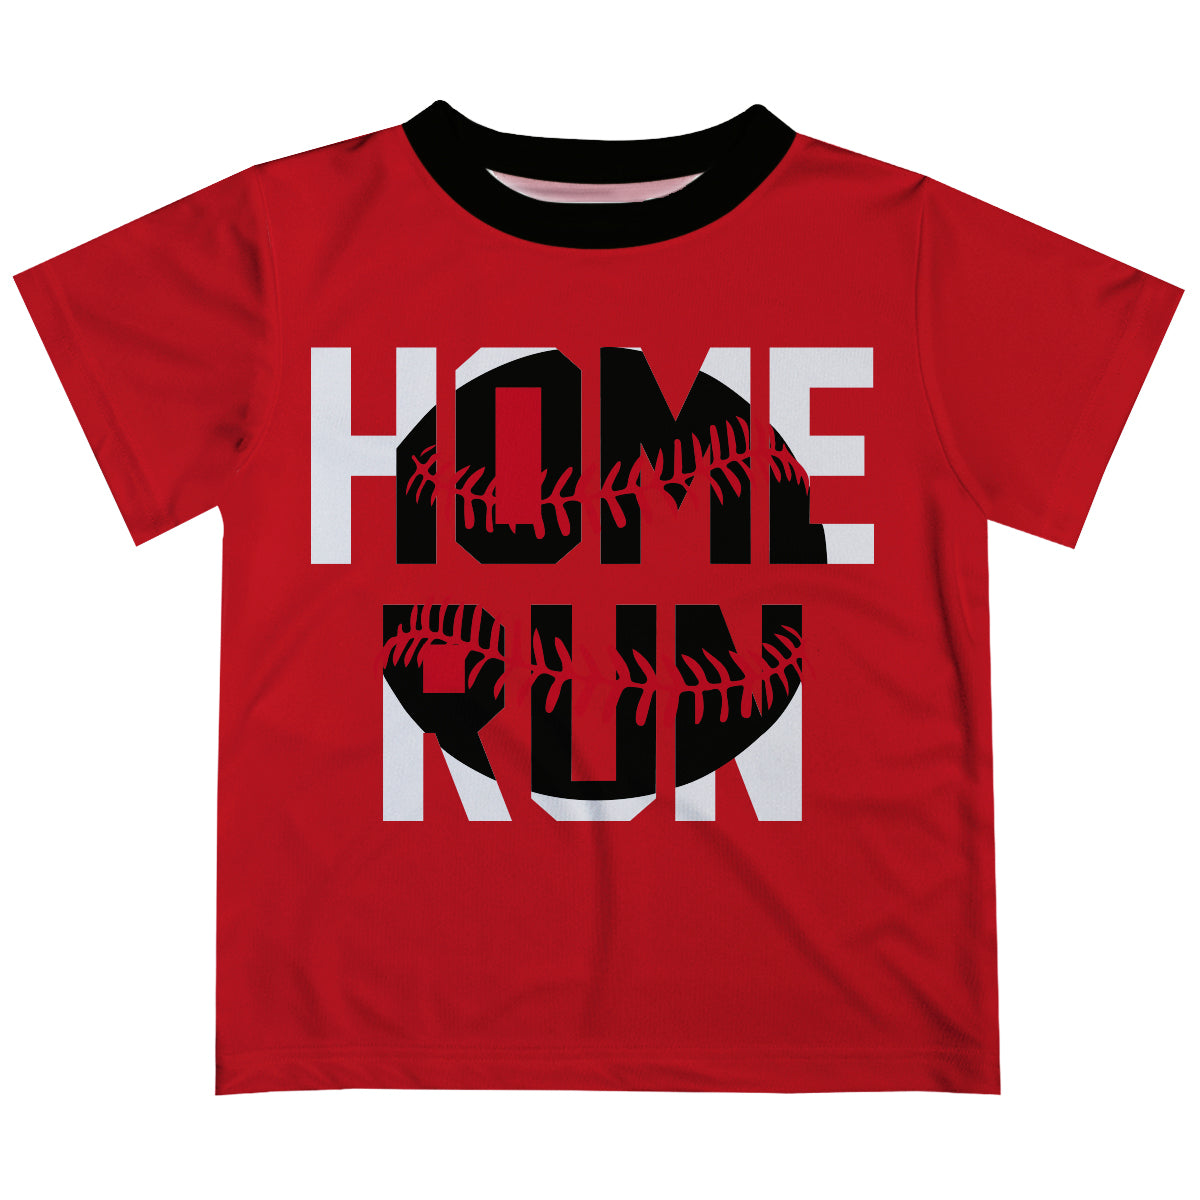 Home Run Red Short Sleeve Tee Shirt